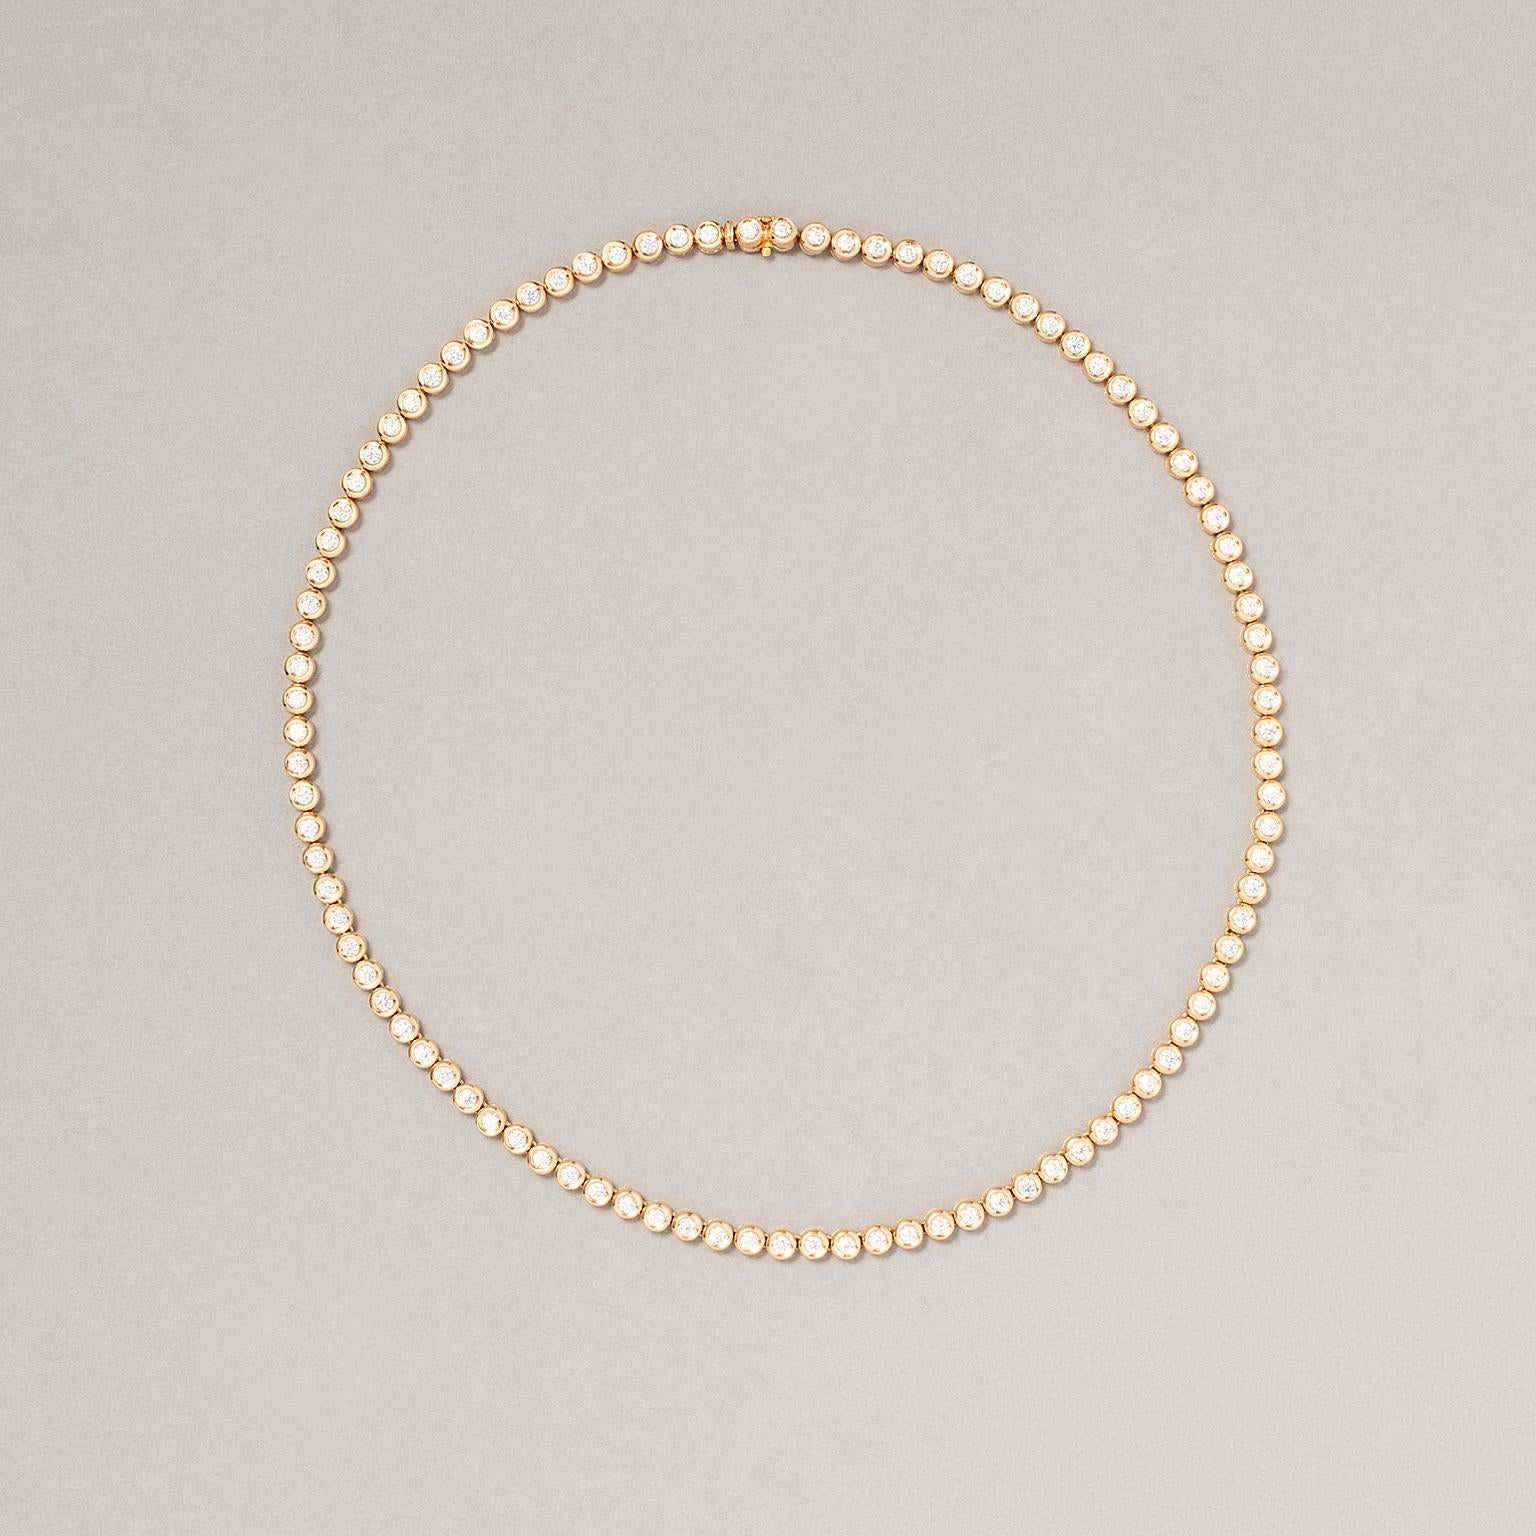 An 18 carat gold necklace set with brilliant cut diamonds (app. 11 carat, F-G, Vs) bezel set, signed: Bulgari.

weight: 22.68 grams
length: 38.3 x 0.5 cm
width: 3 – 3.5 mm